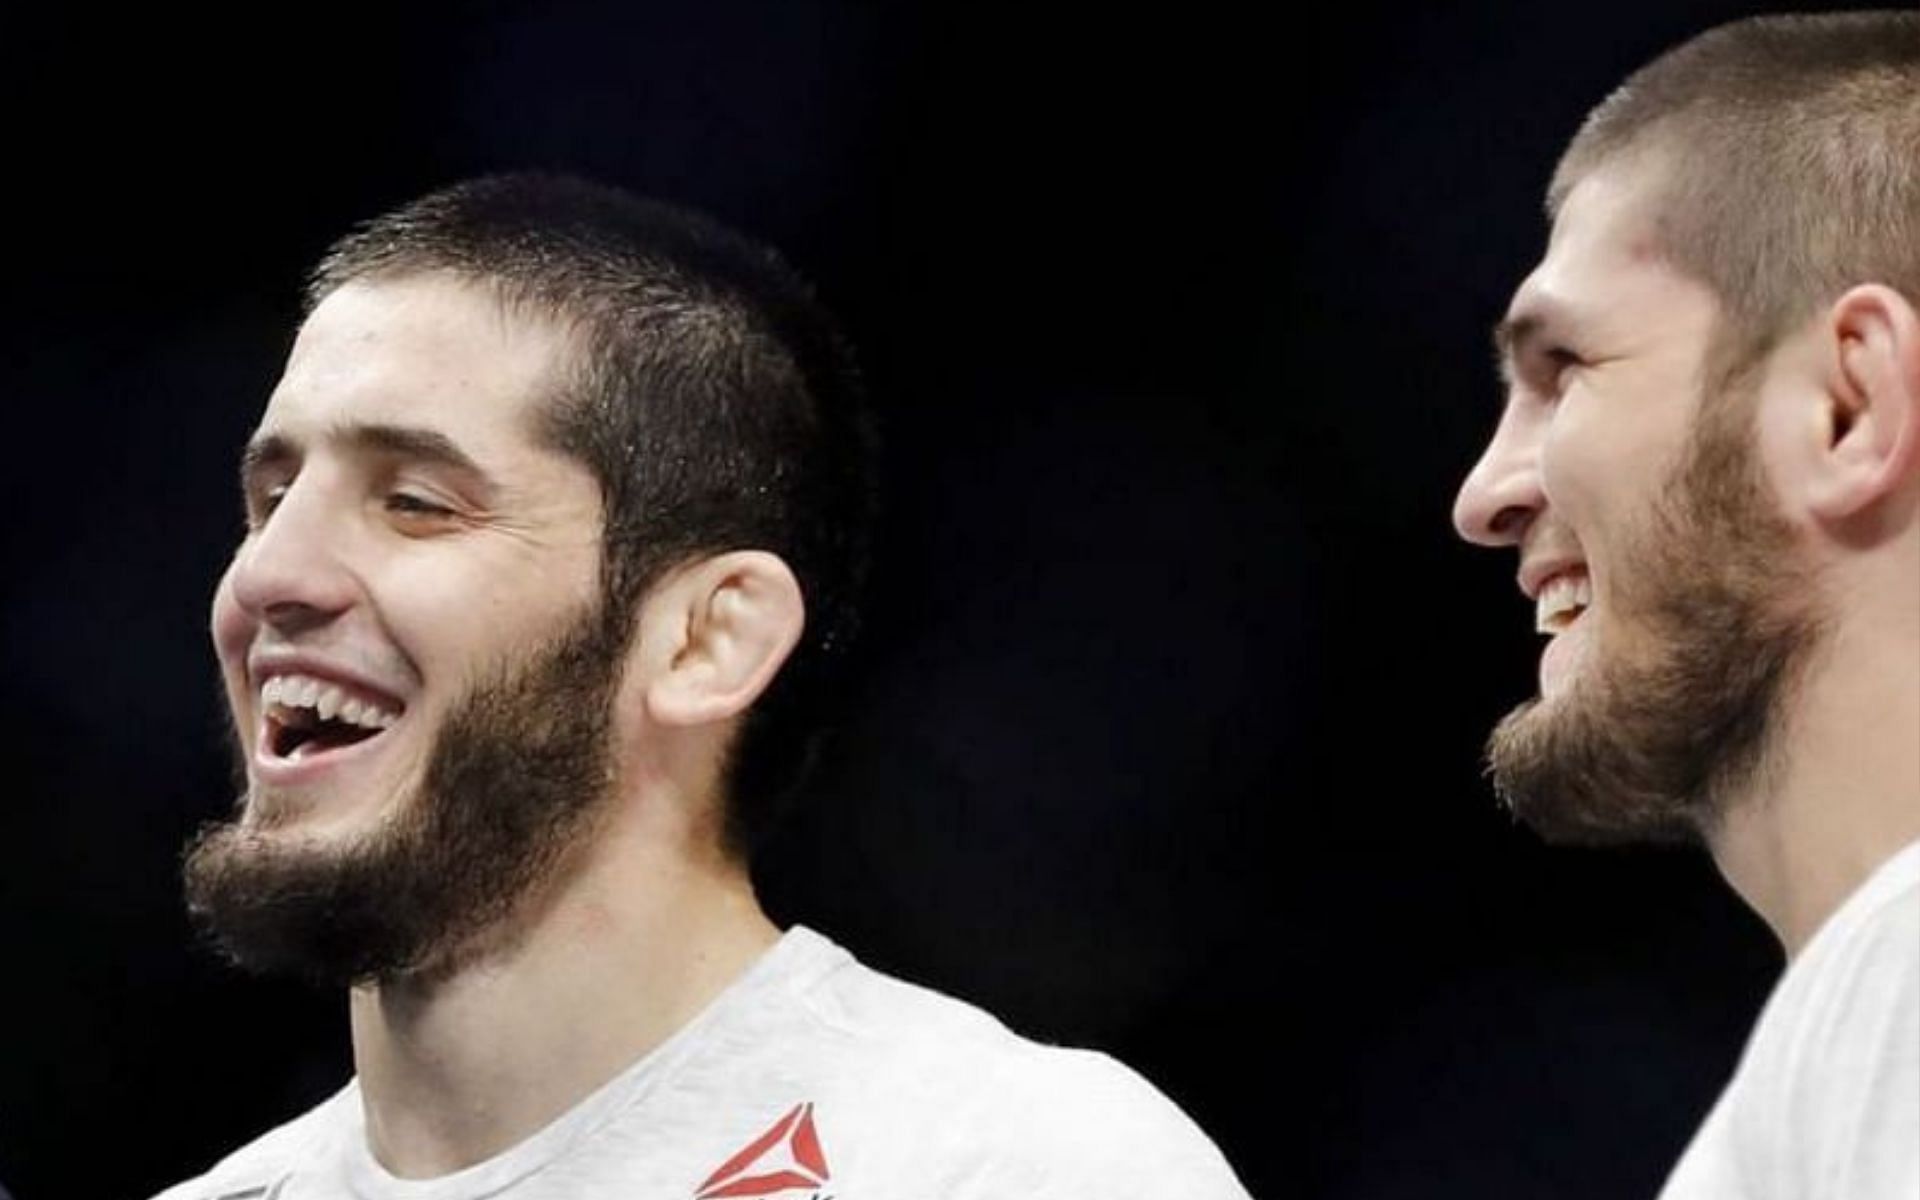 Islam Makhachev (left) &amp; Khabib Nurmagomedov (right) [Image Credits- MMA Fighting]